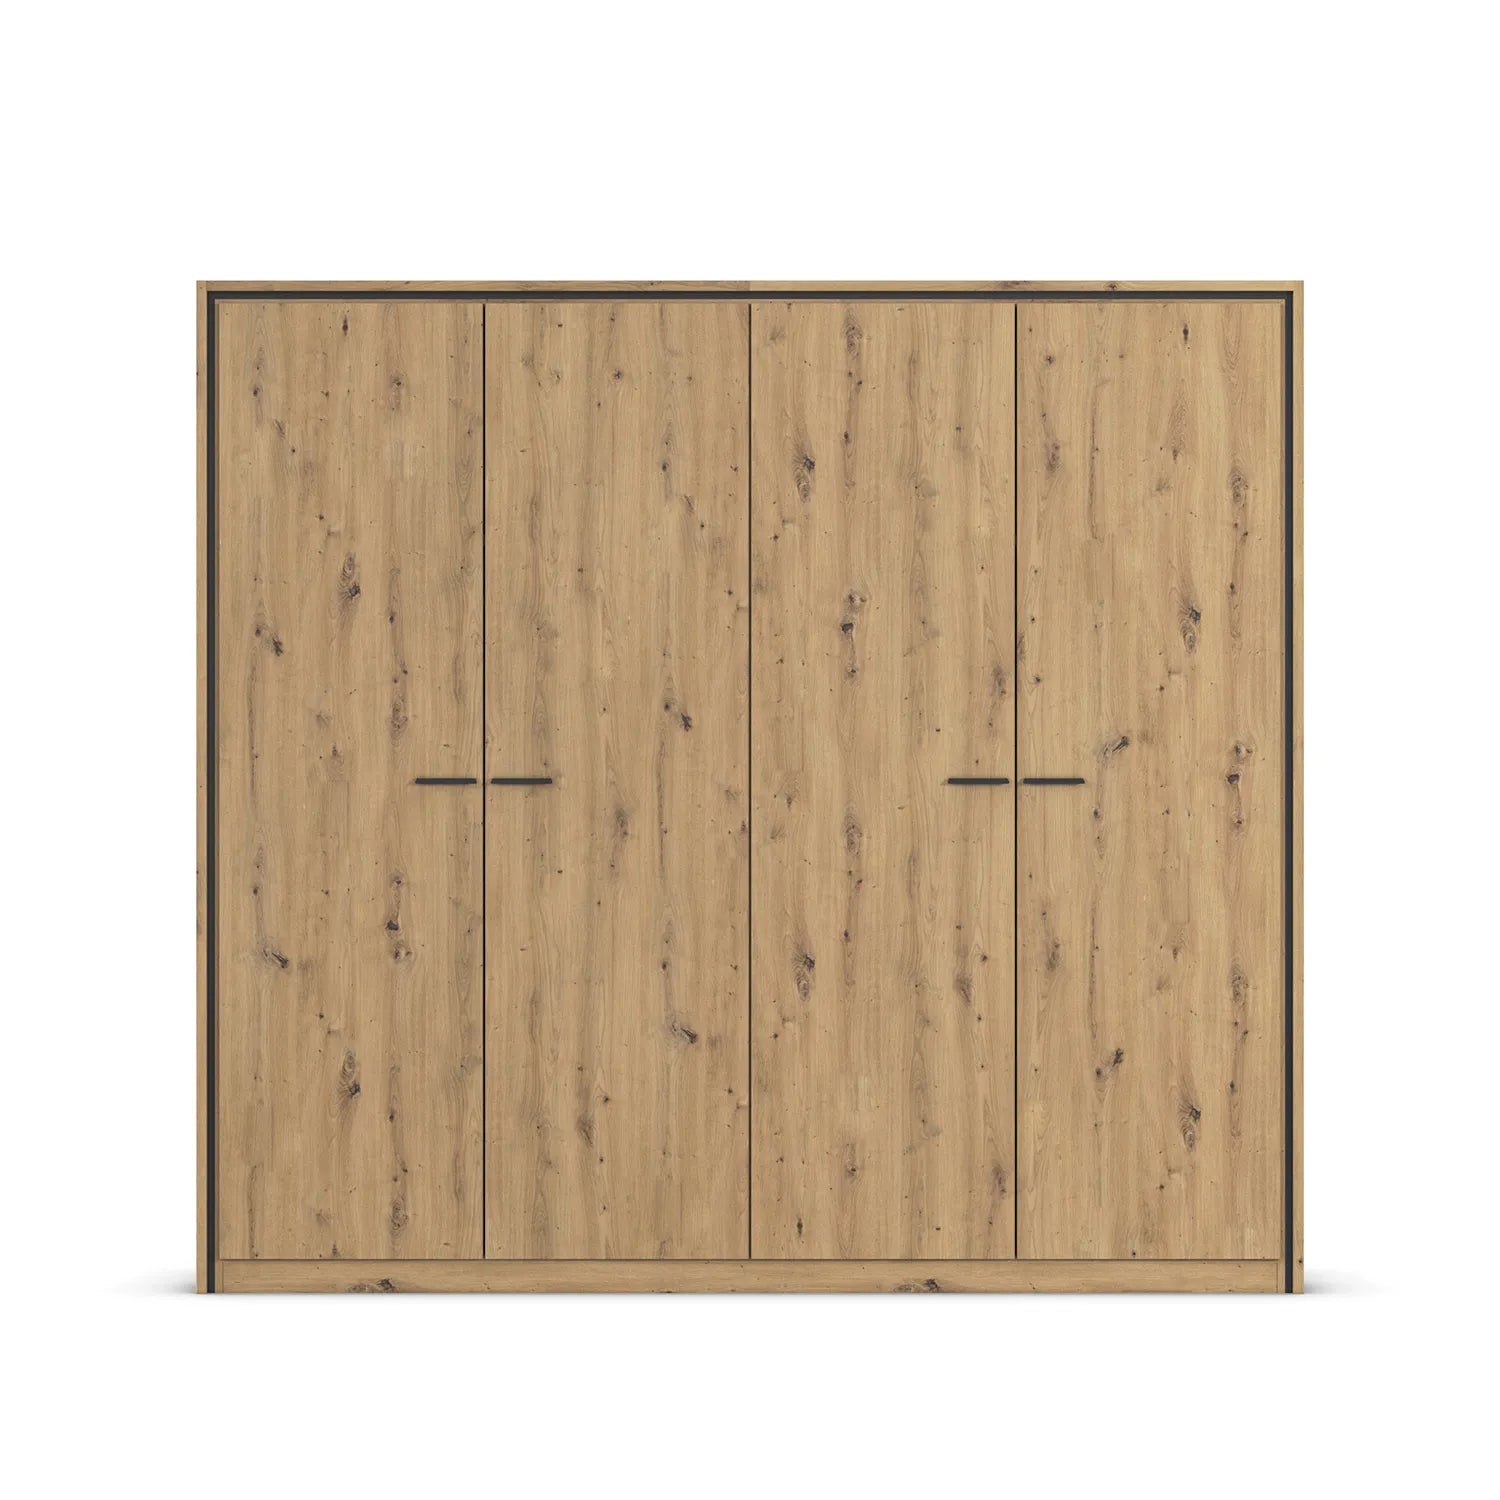 Zolo Artisan Oak 4 Door hinged Wardrobe - 230cm